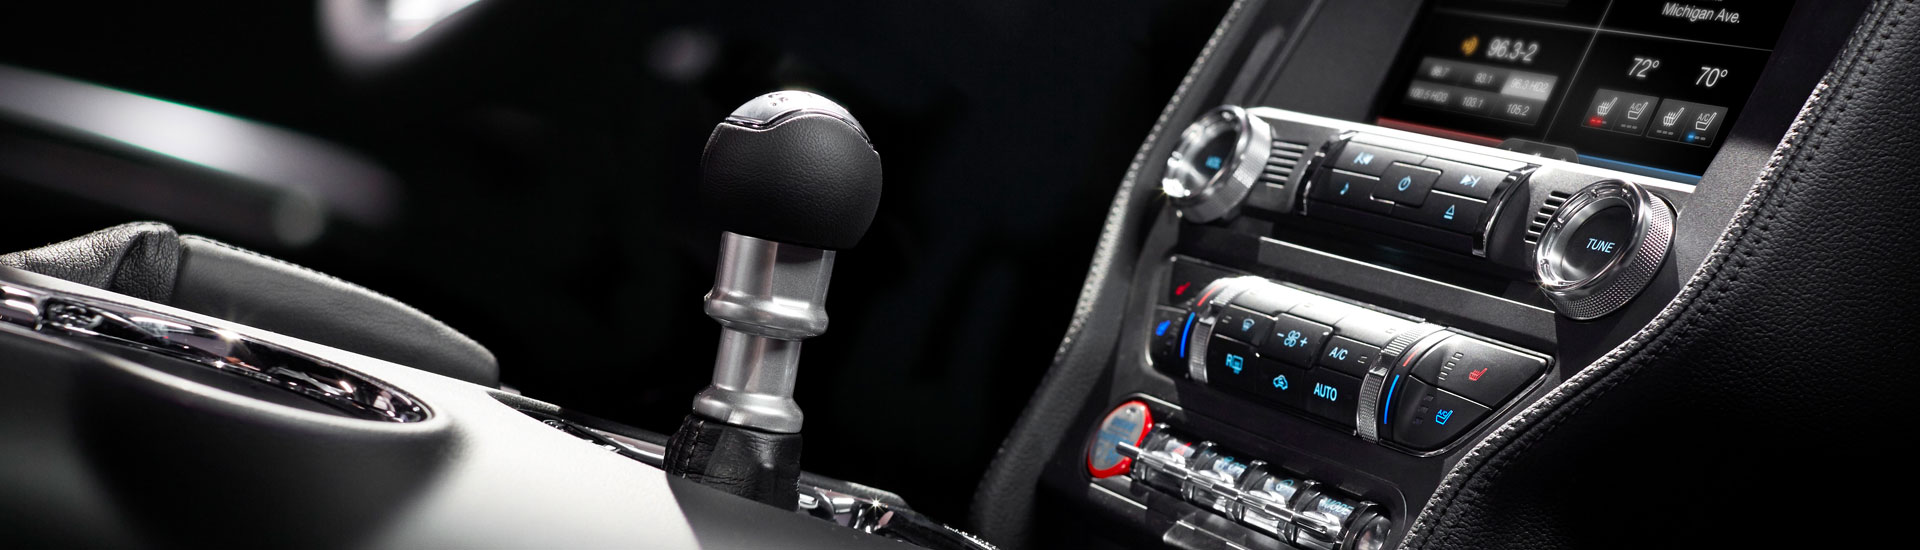 Aston Martin V8 Vantage Custom Dash Kits